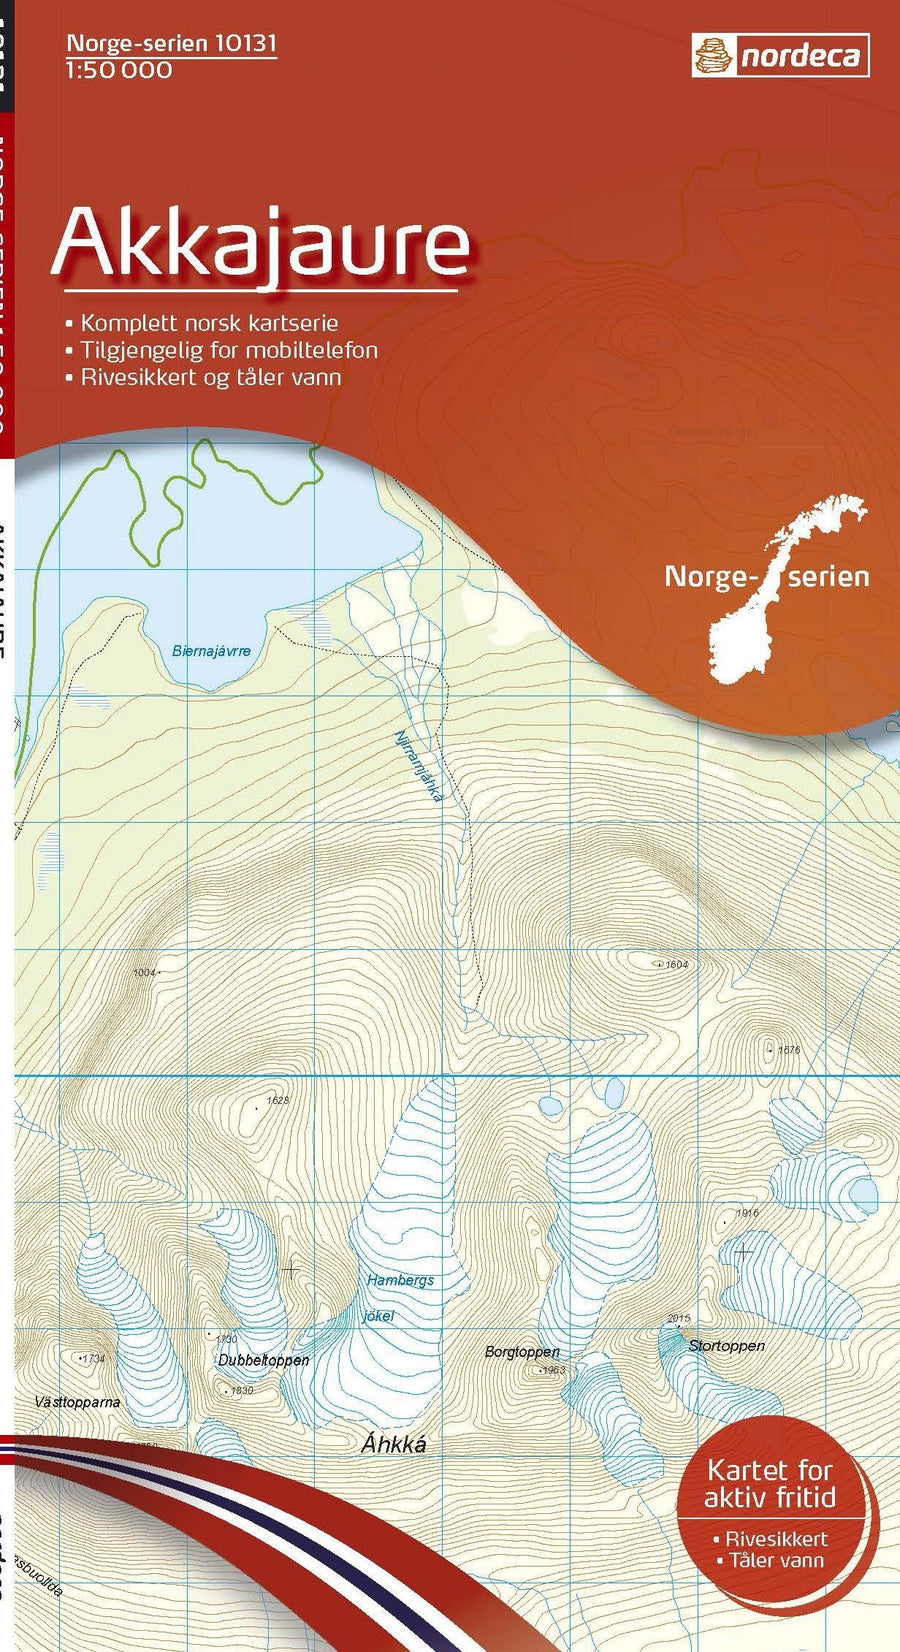 Carte de randonnée n° 10131 - Akkajaure (Norvège) | Nordeca - Norge-serien carte pliée Nordeca 